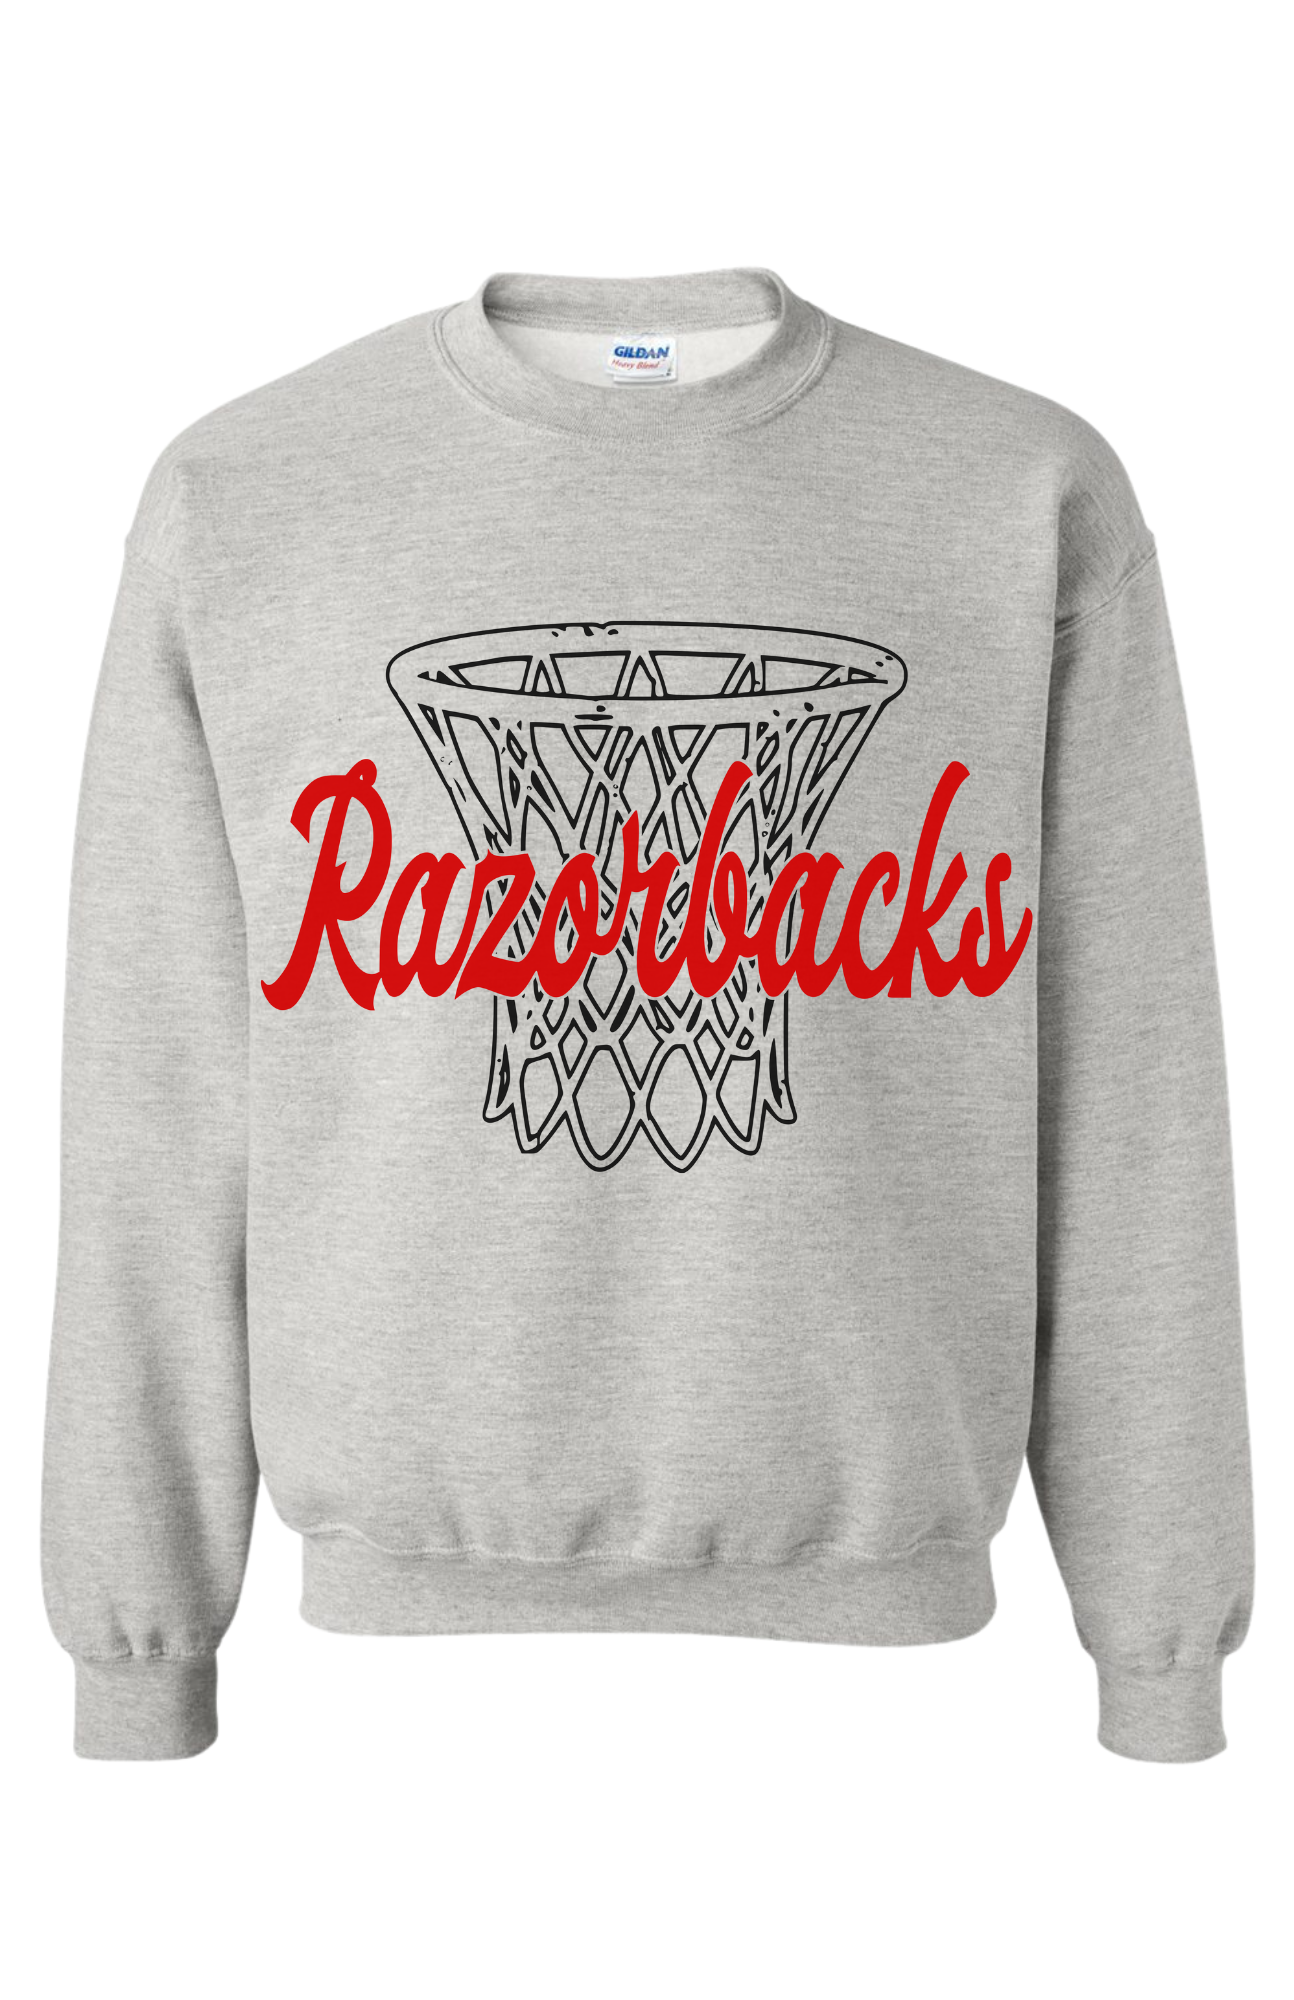 Arkansas Basketball Razorbacks Cursive Sweatshirt